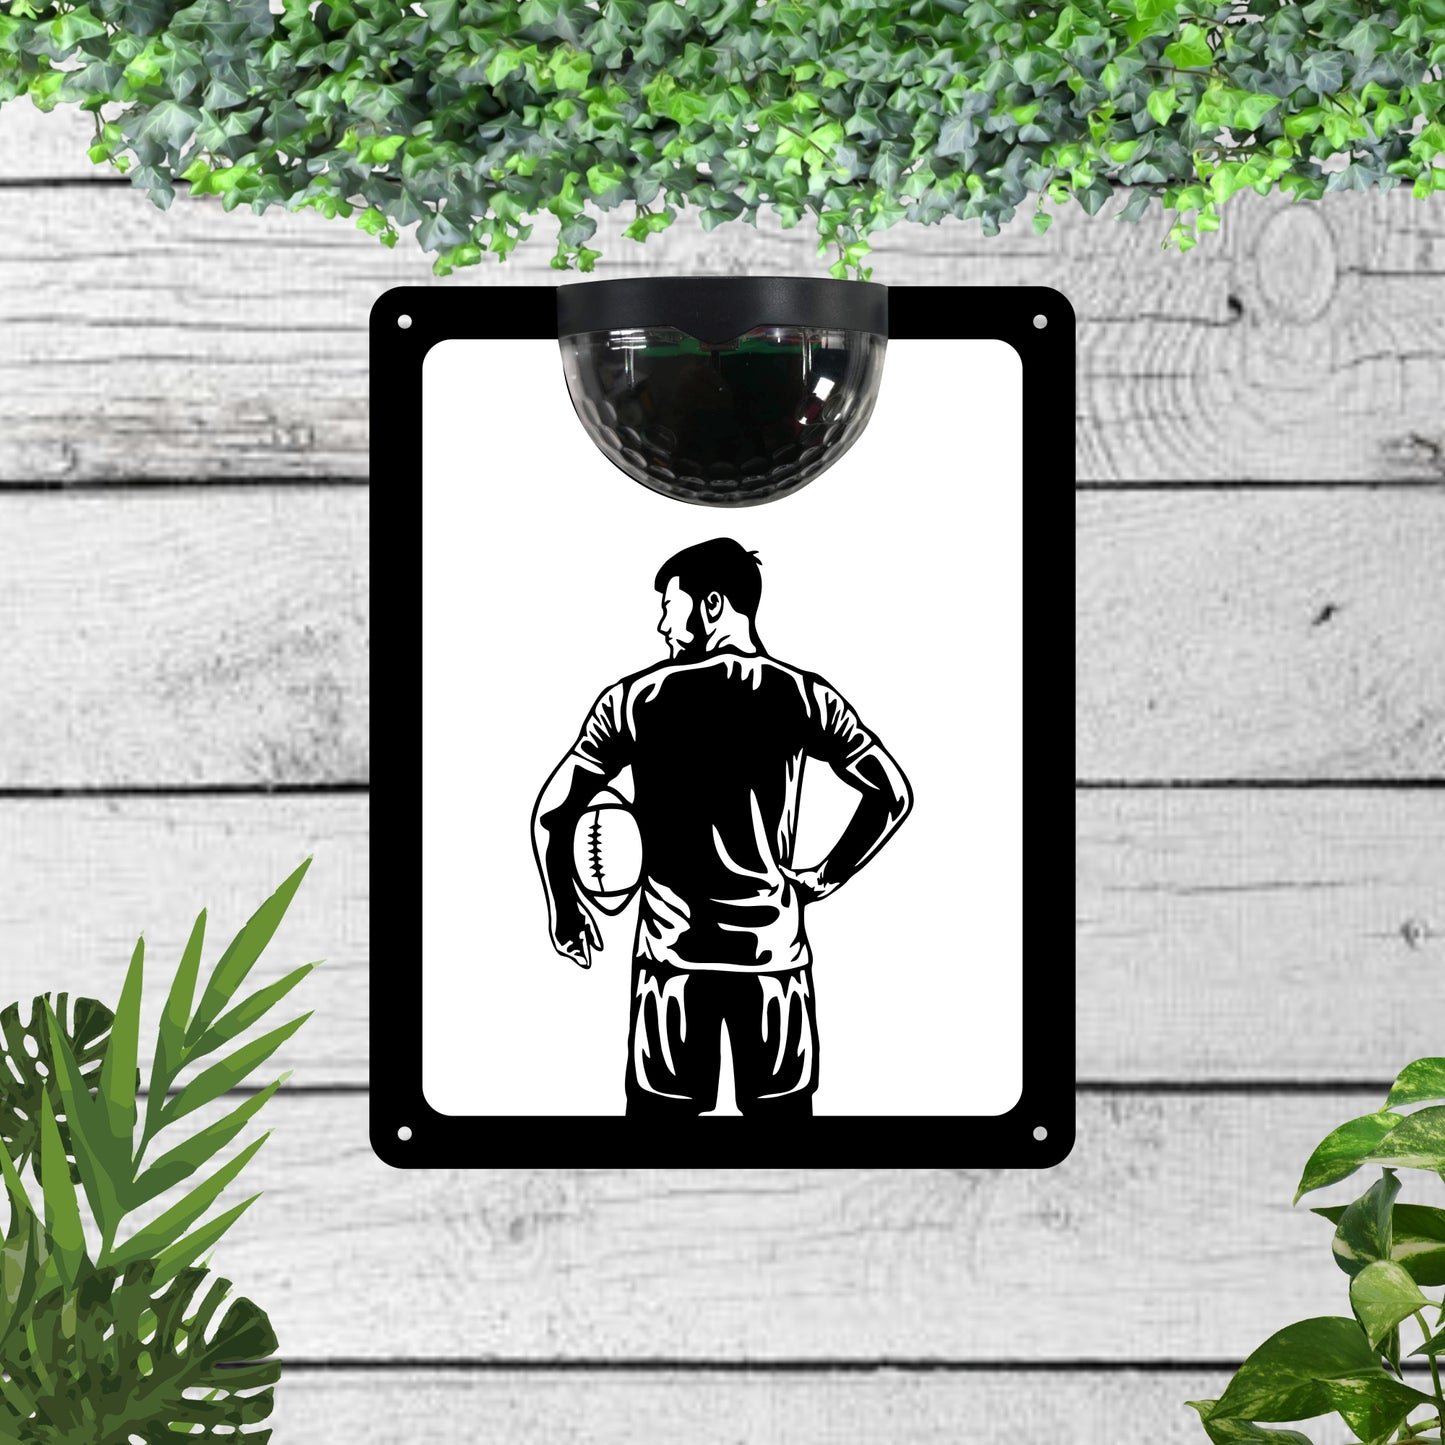 Garden solar wall plaque featuring a rugby player | John Alans